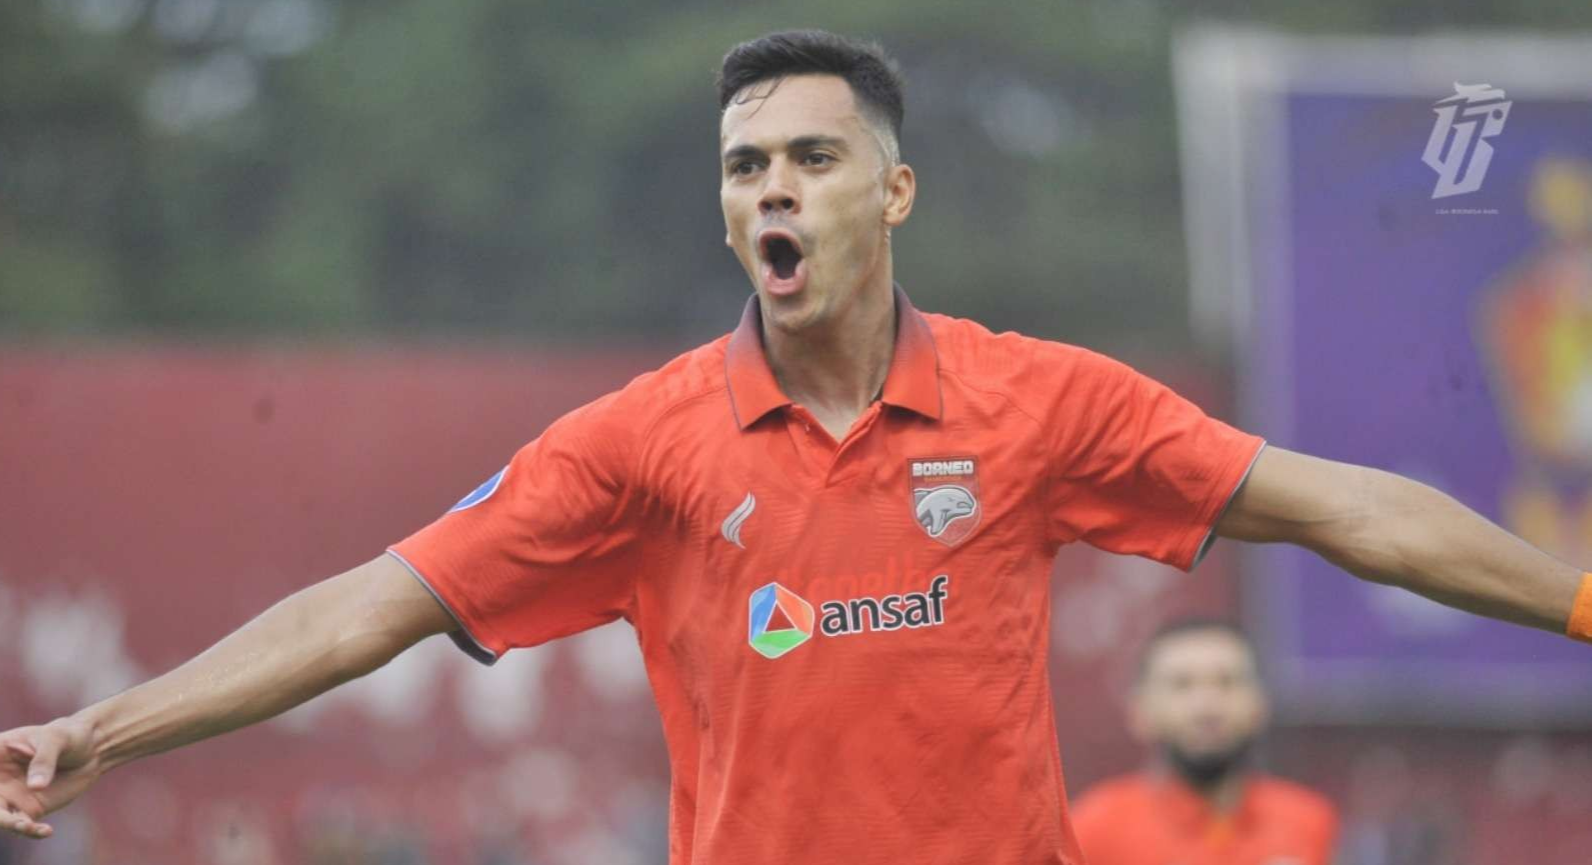 Pemain Borneo FC, Matheus Antonio De Sousa Santos (Pato), menjadi pemain yang diwaspadai Persebaya. (Foto: LIB)